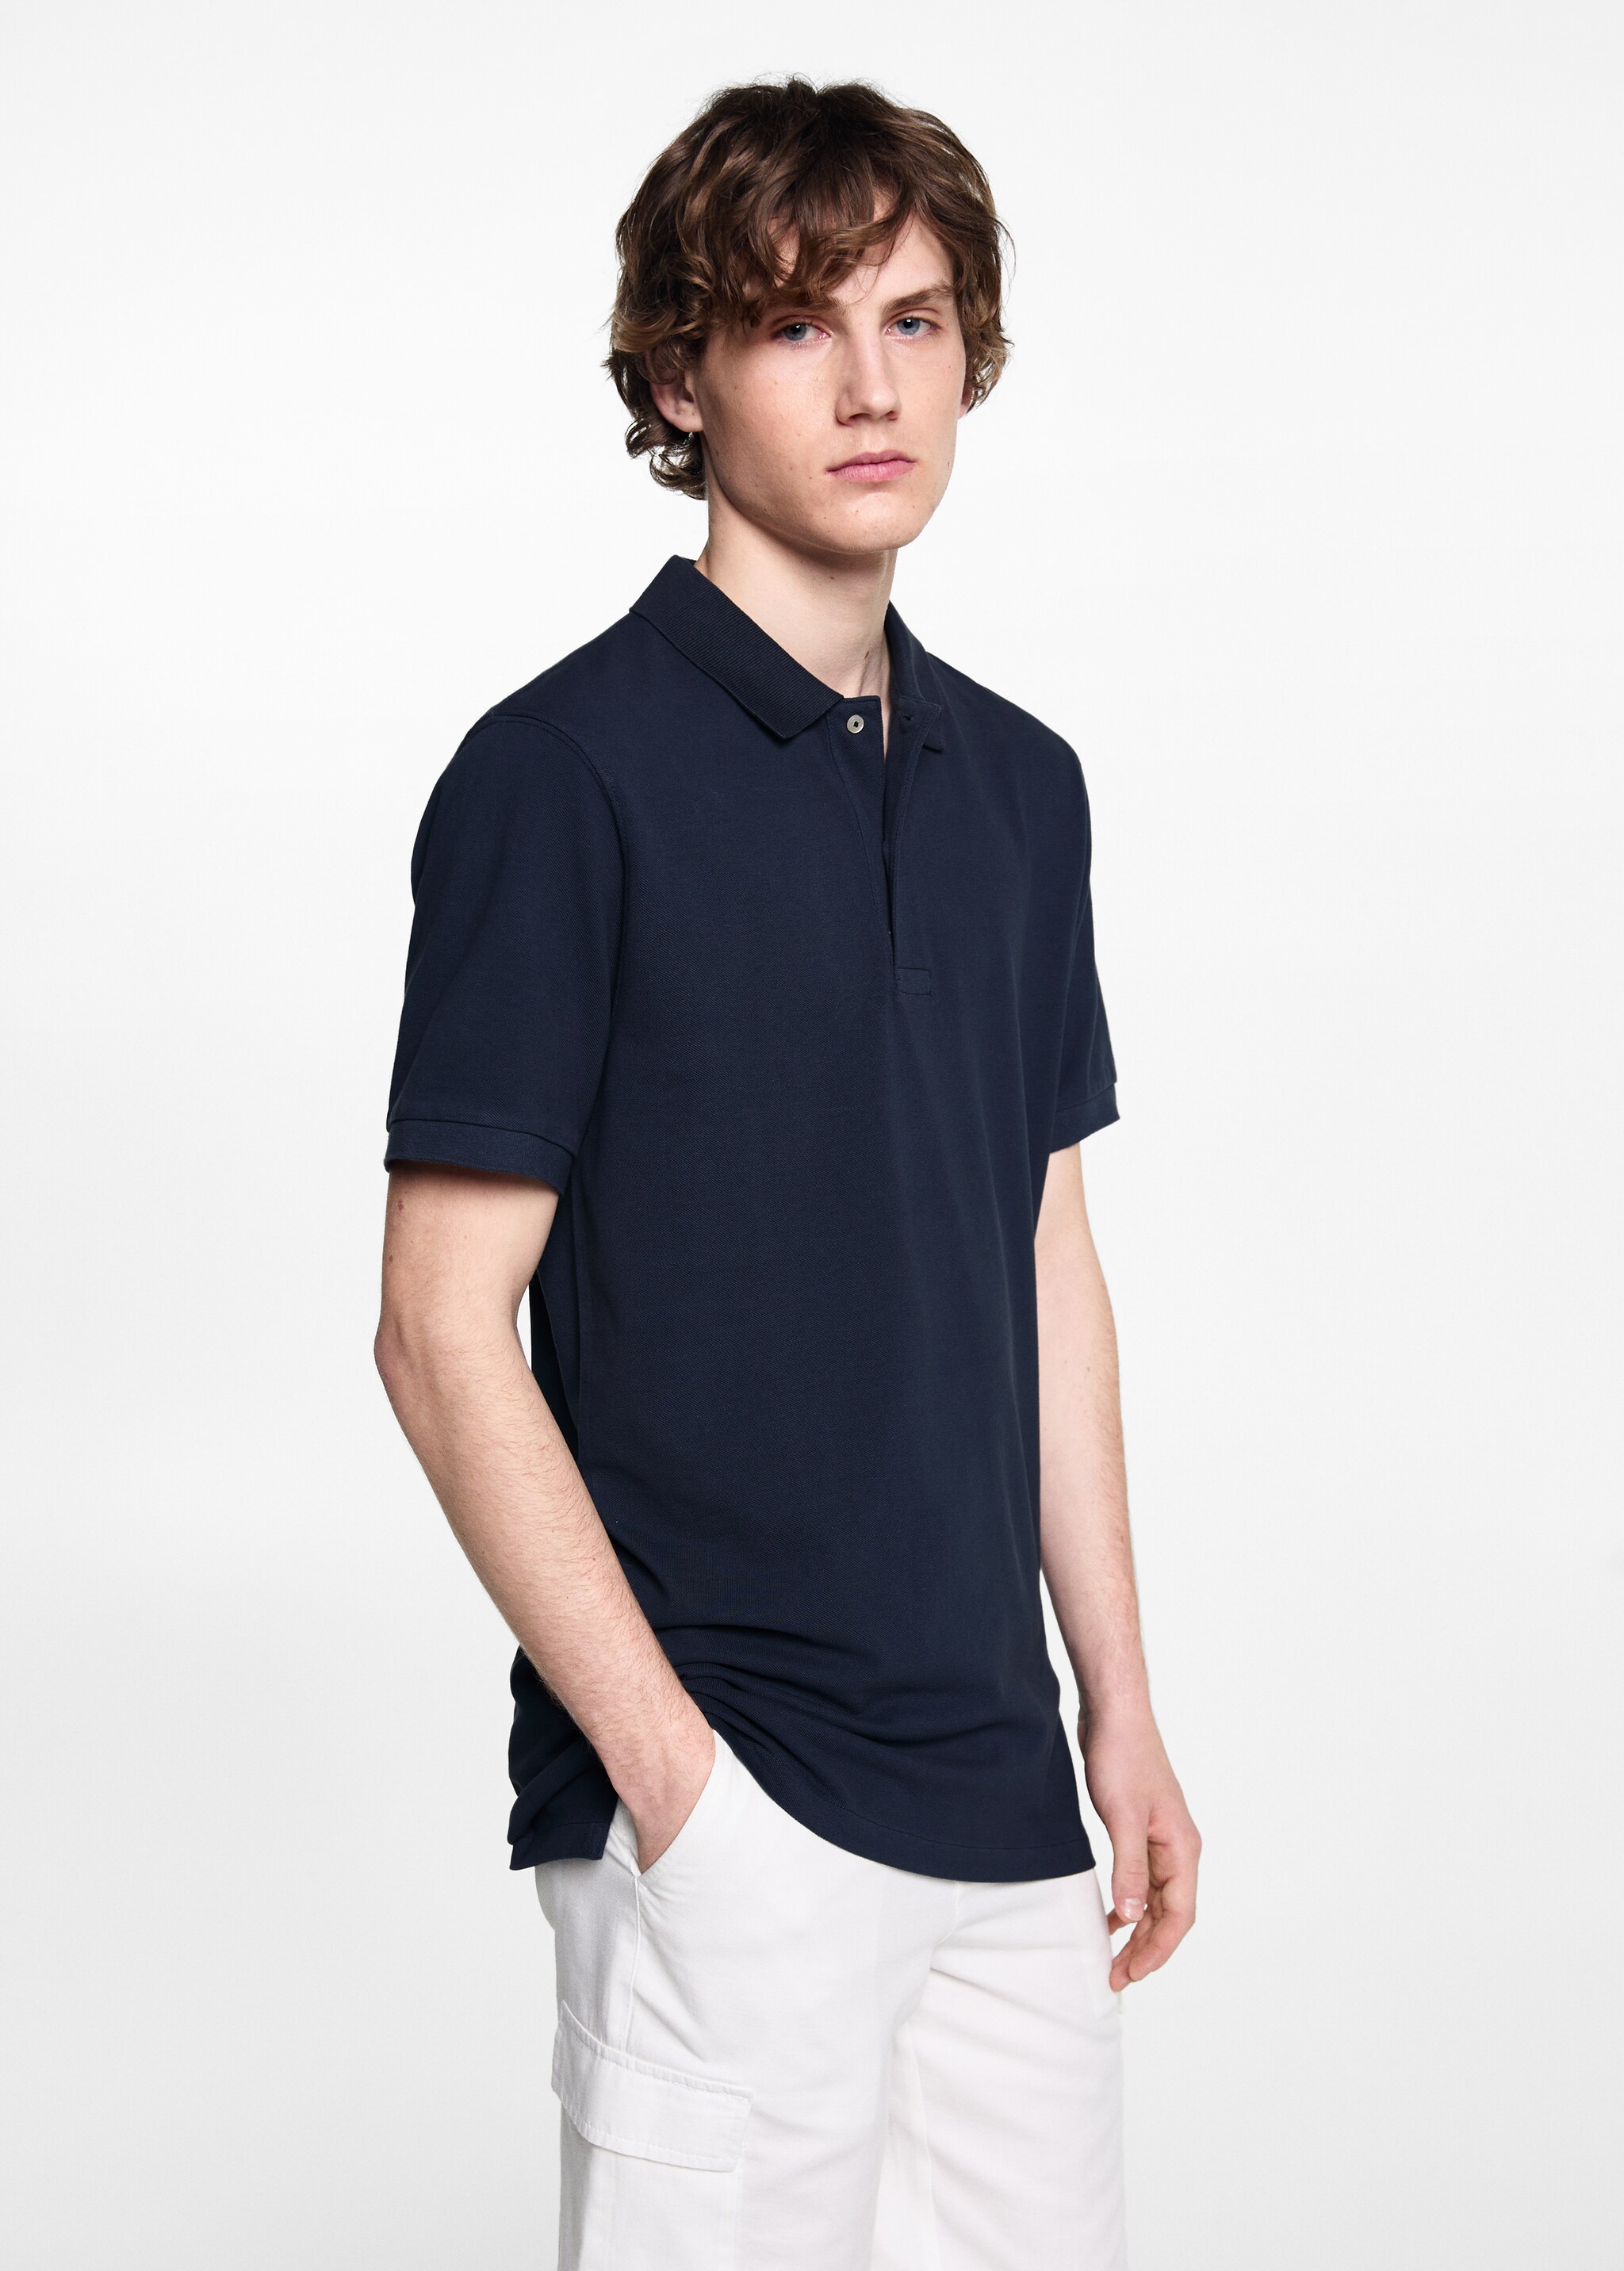 Short-sleeved cotton polo shirt - Medium plane